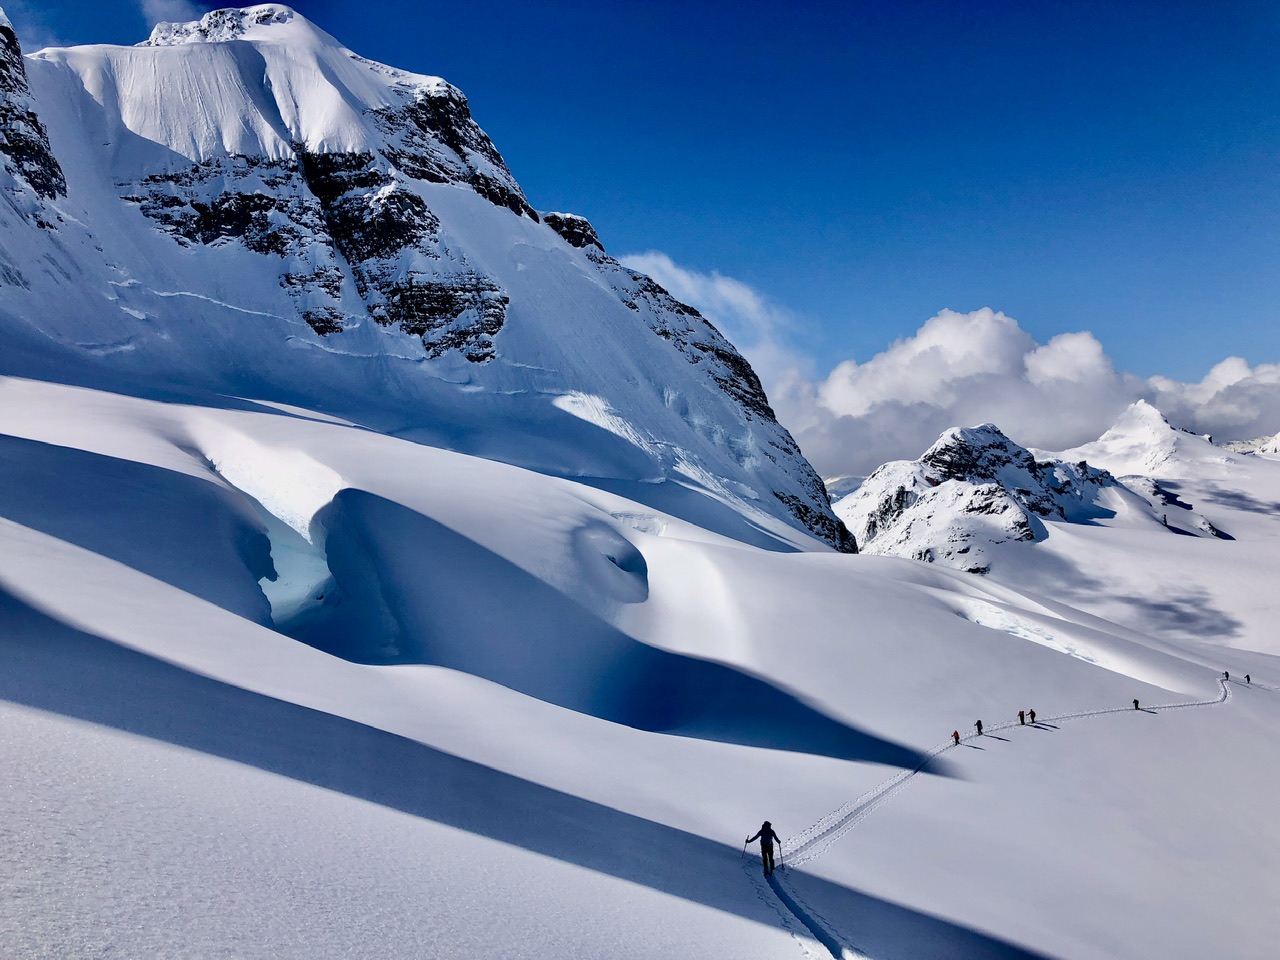 Burnie Glacier Chalet Conditions Report